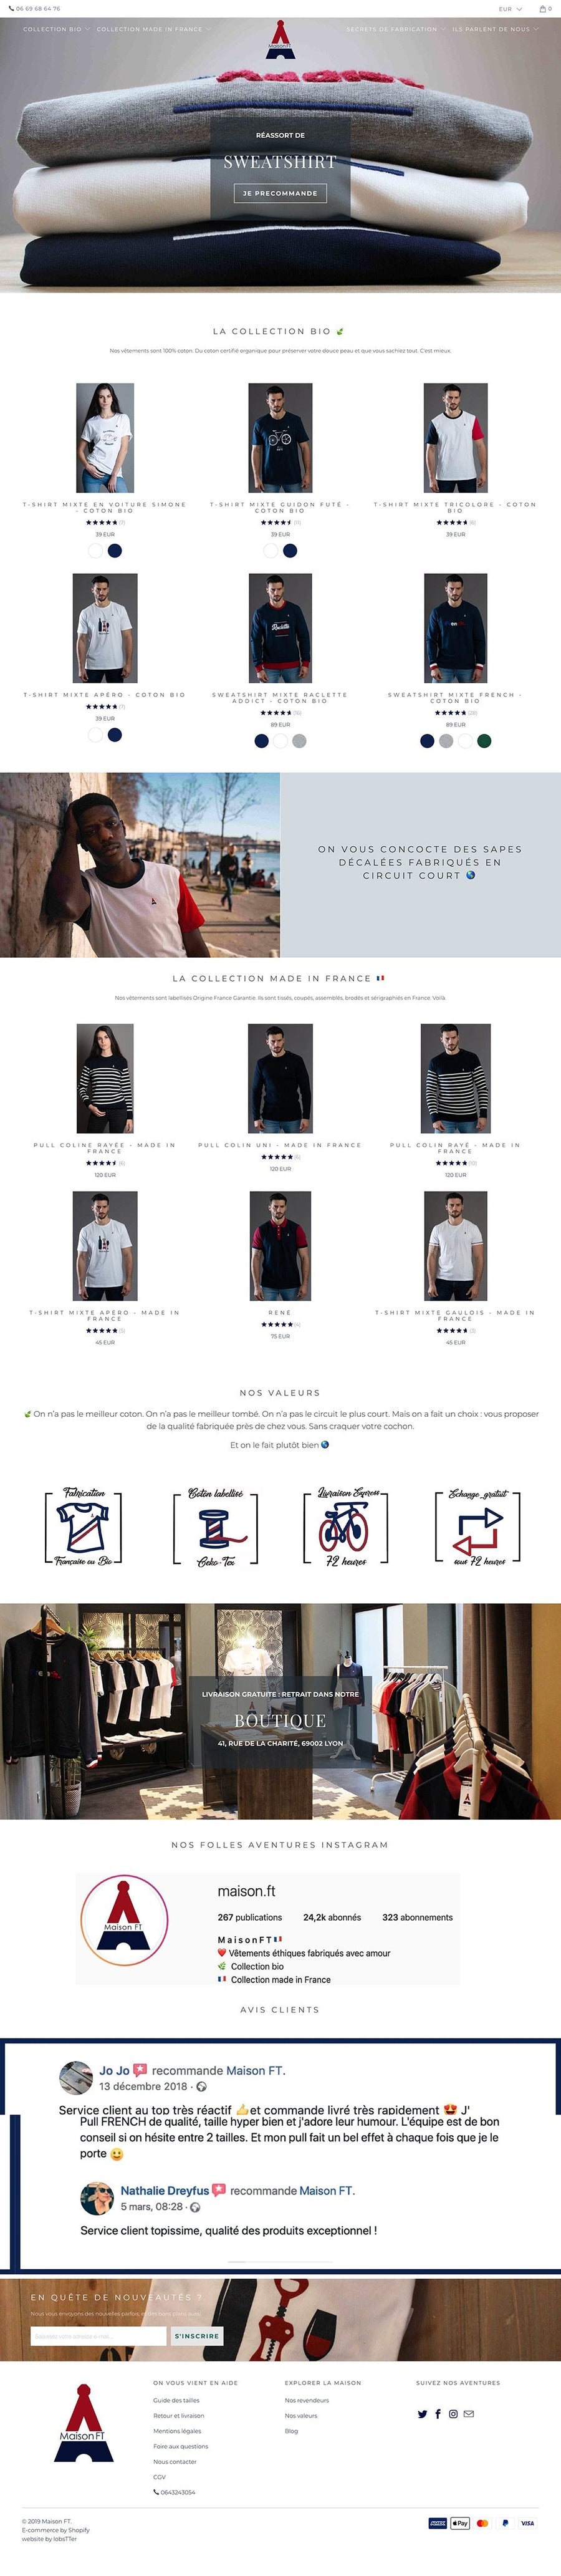 MaisonFT.com marque de T-shirt Eco responsable & Bio Exemple de site Mode Agence Shopify Plus & Expert Shopify